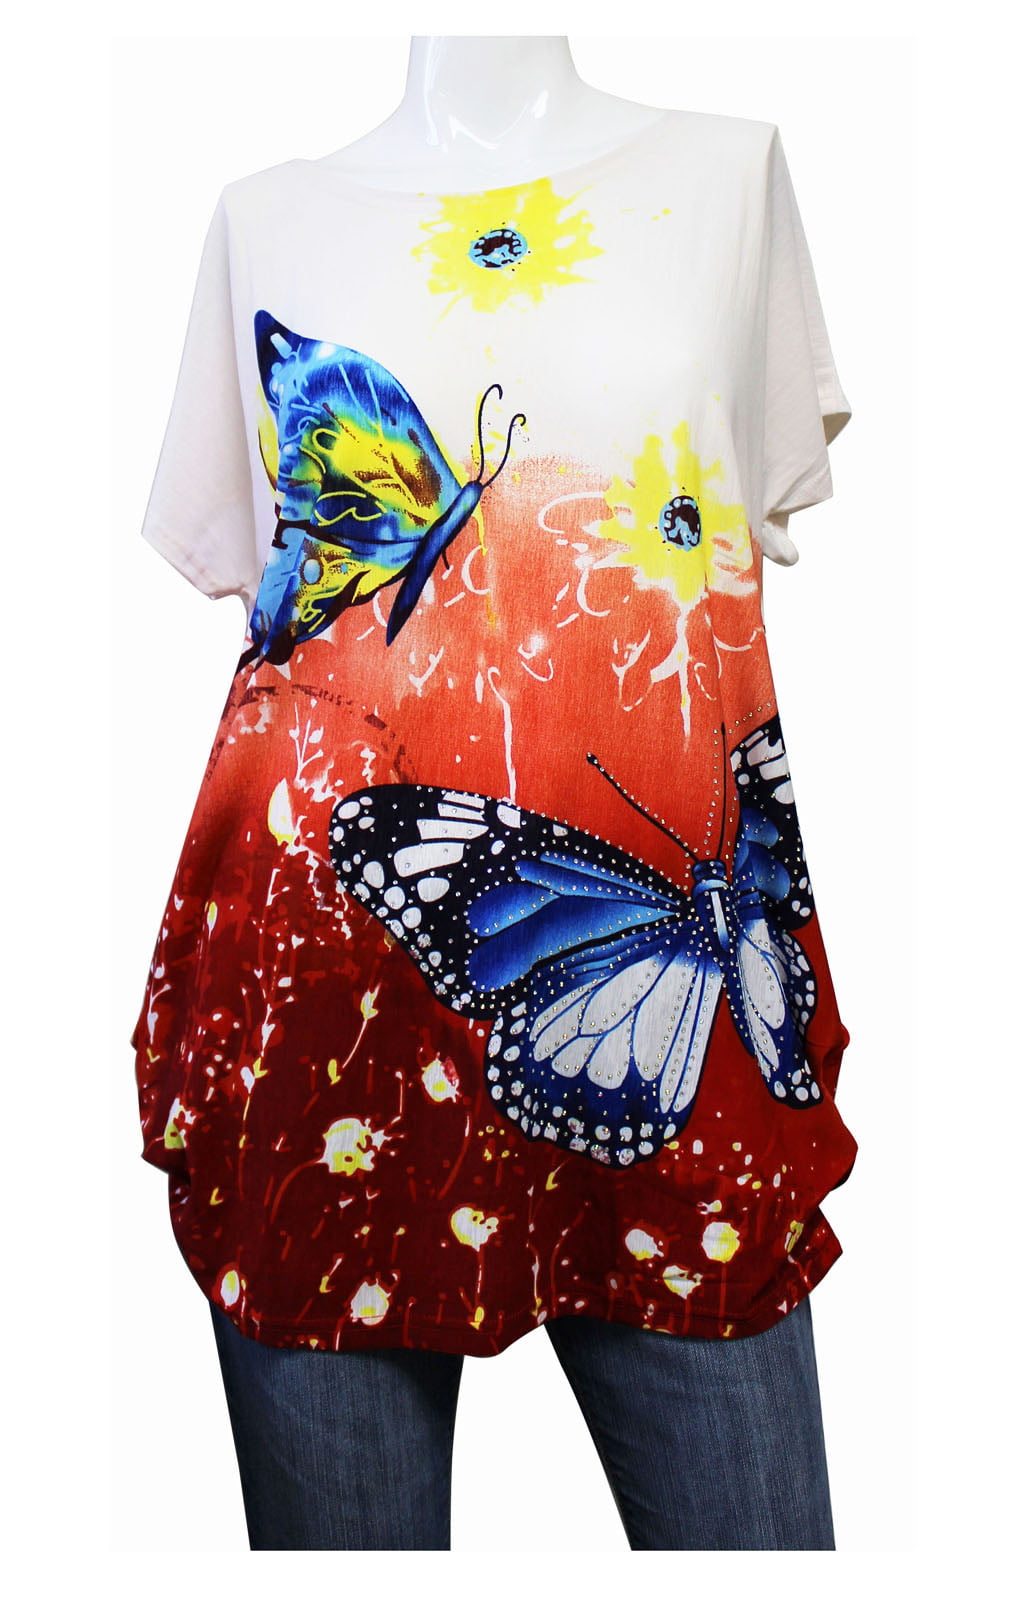 Orange Fade Women's Shirt With Blue Butterfly Graphic (XL/XXL ...